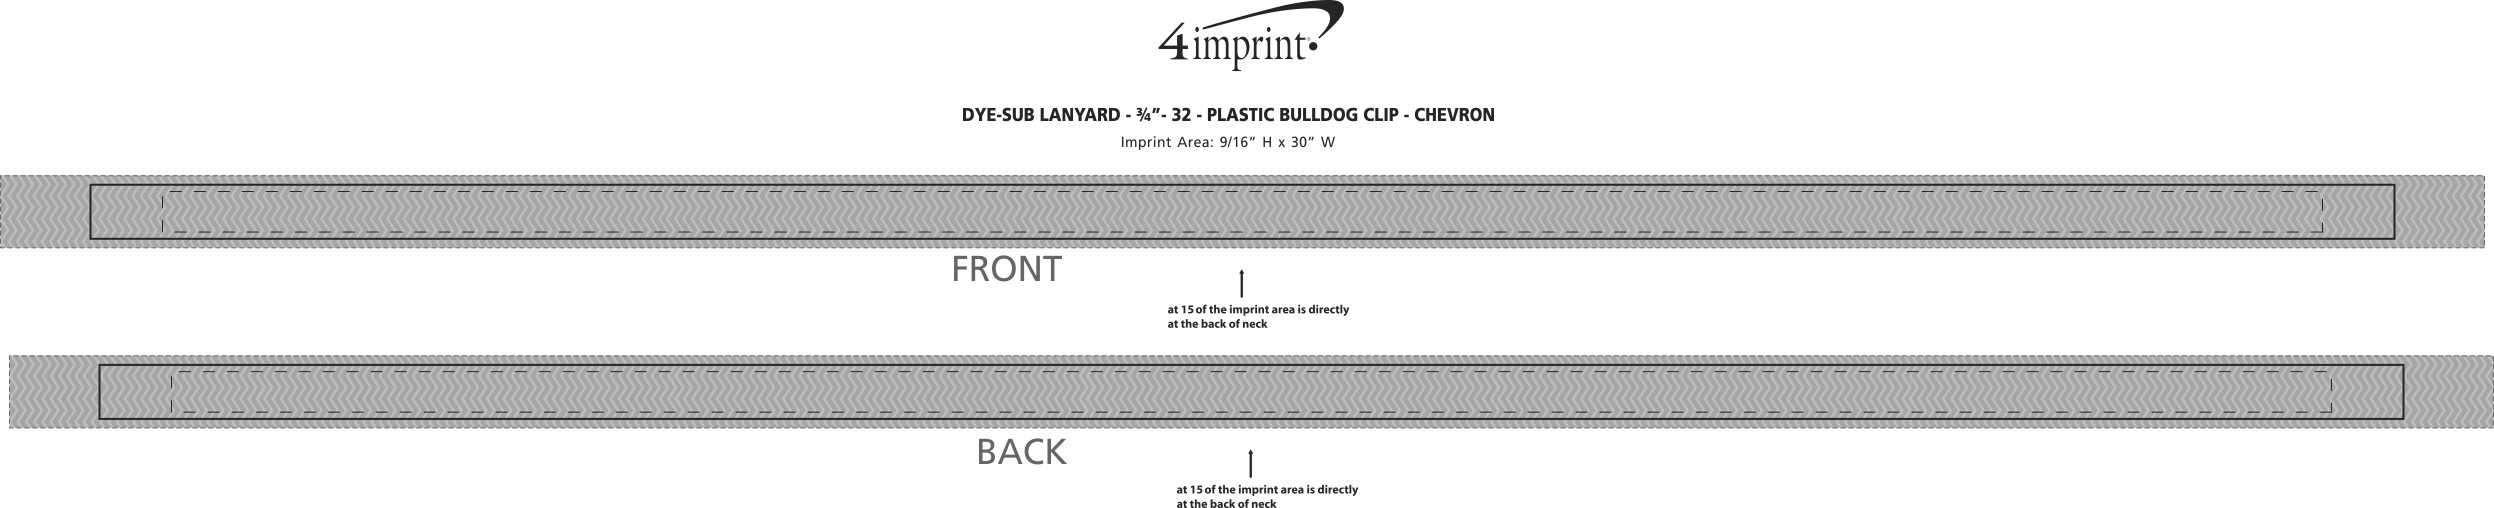 Imprint Area of Dye-Sub Lanyard - 3/4" - 32" - Plastic Bulldog Clip - Chevron - 24 hr